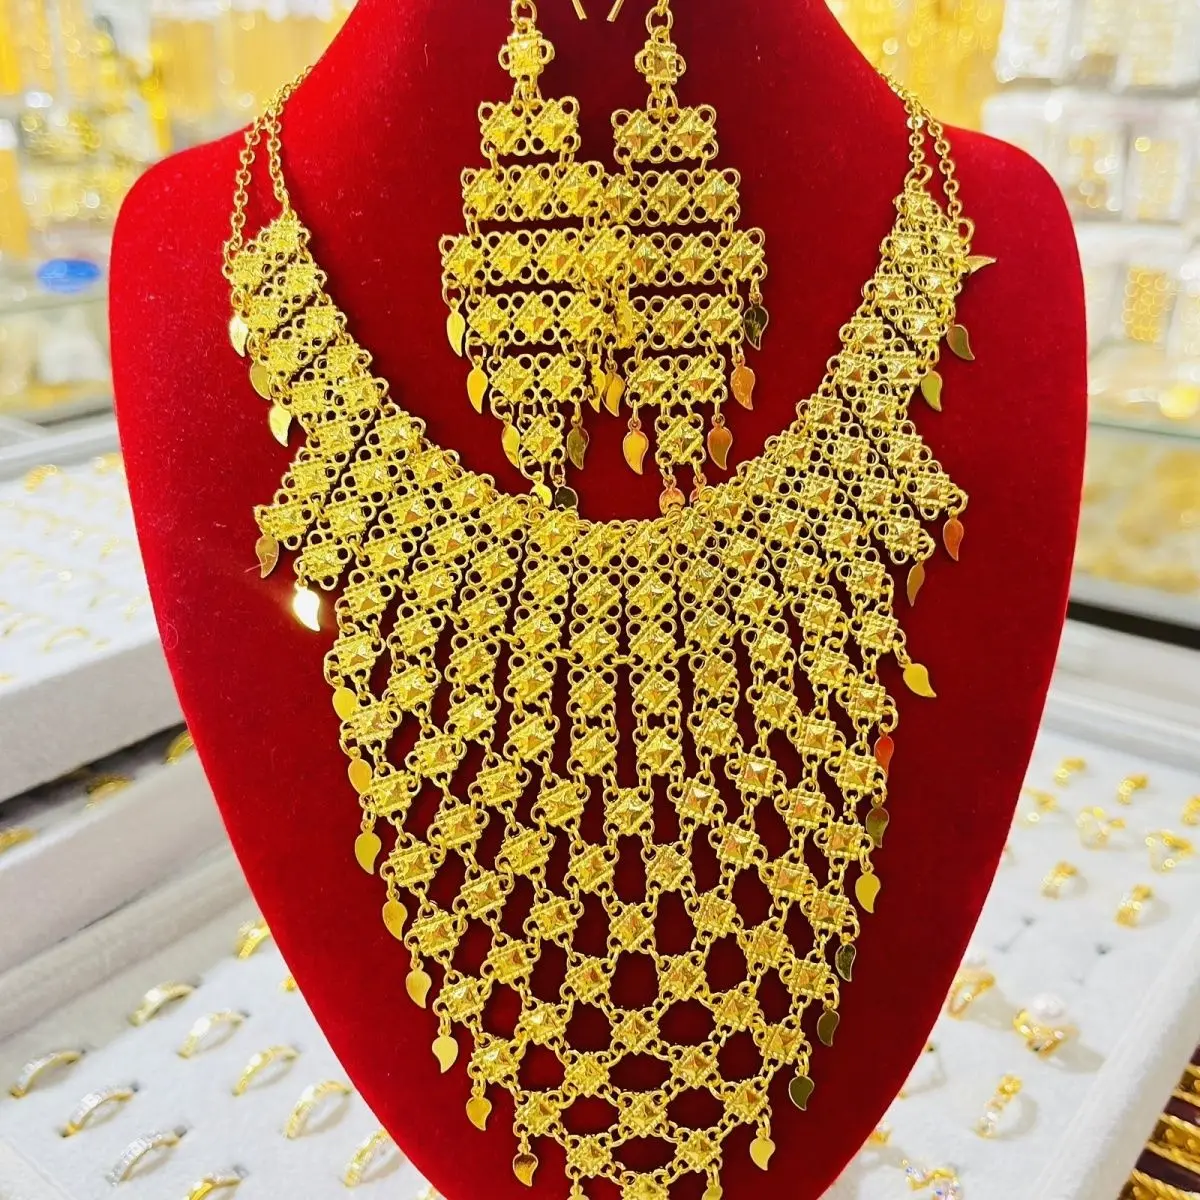 Popodion New Dubai Jewelry Set Women's Necklace Earrings Ring Bridal Wedding Accessories YY10093 dubai knight